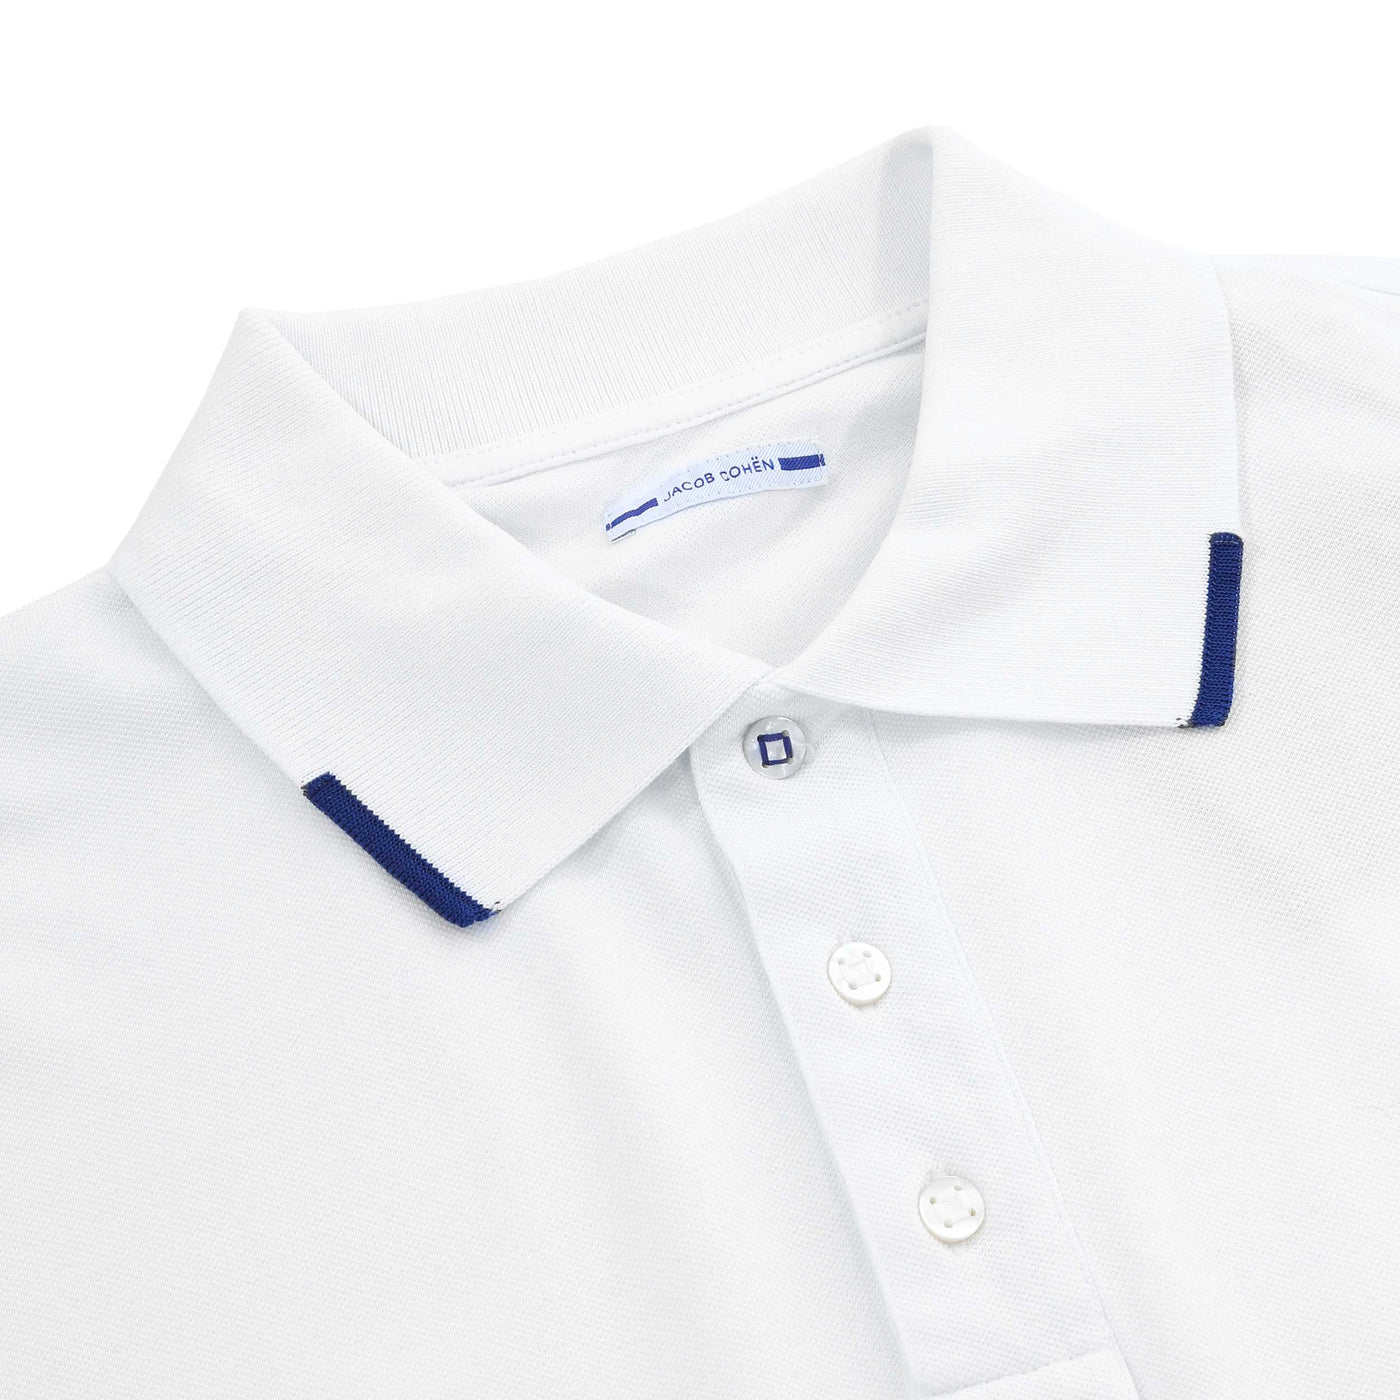 Jacob Cohen Tipped Polo Shirt in White Collar